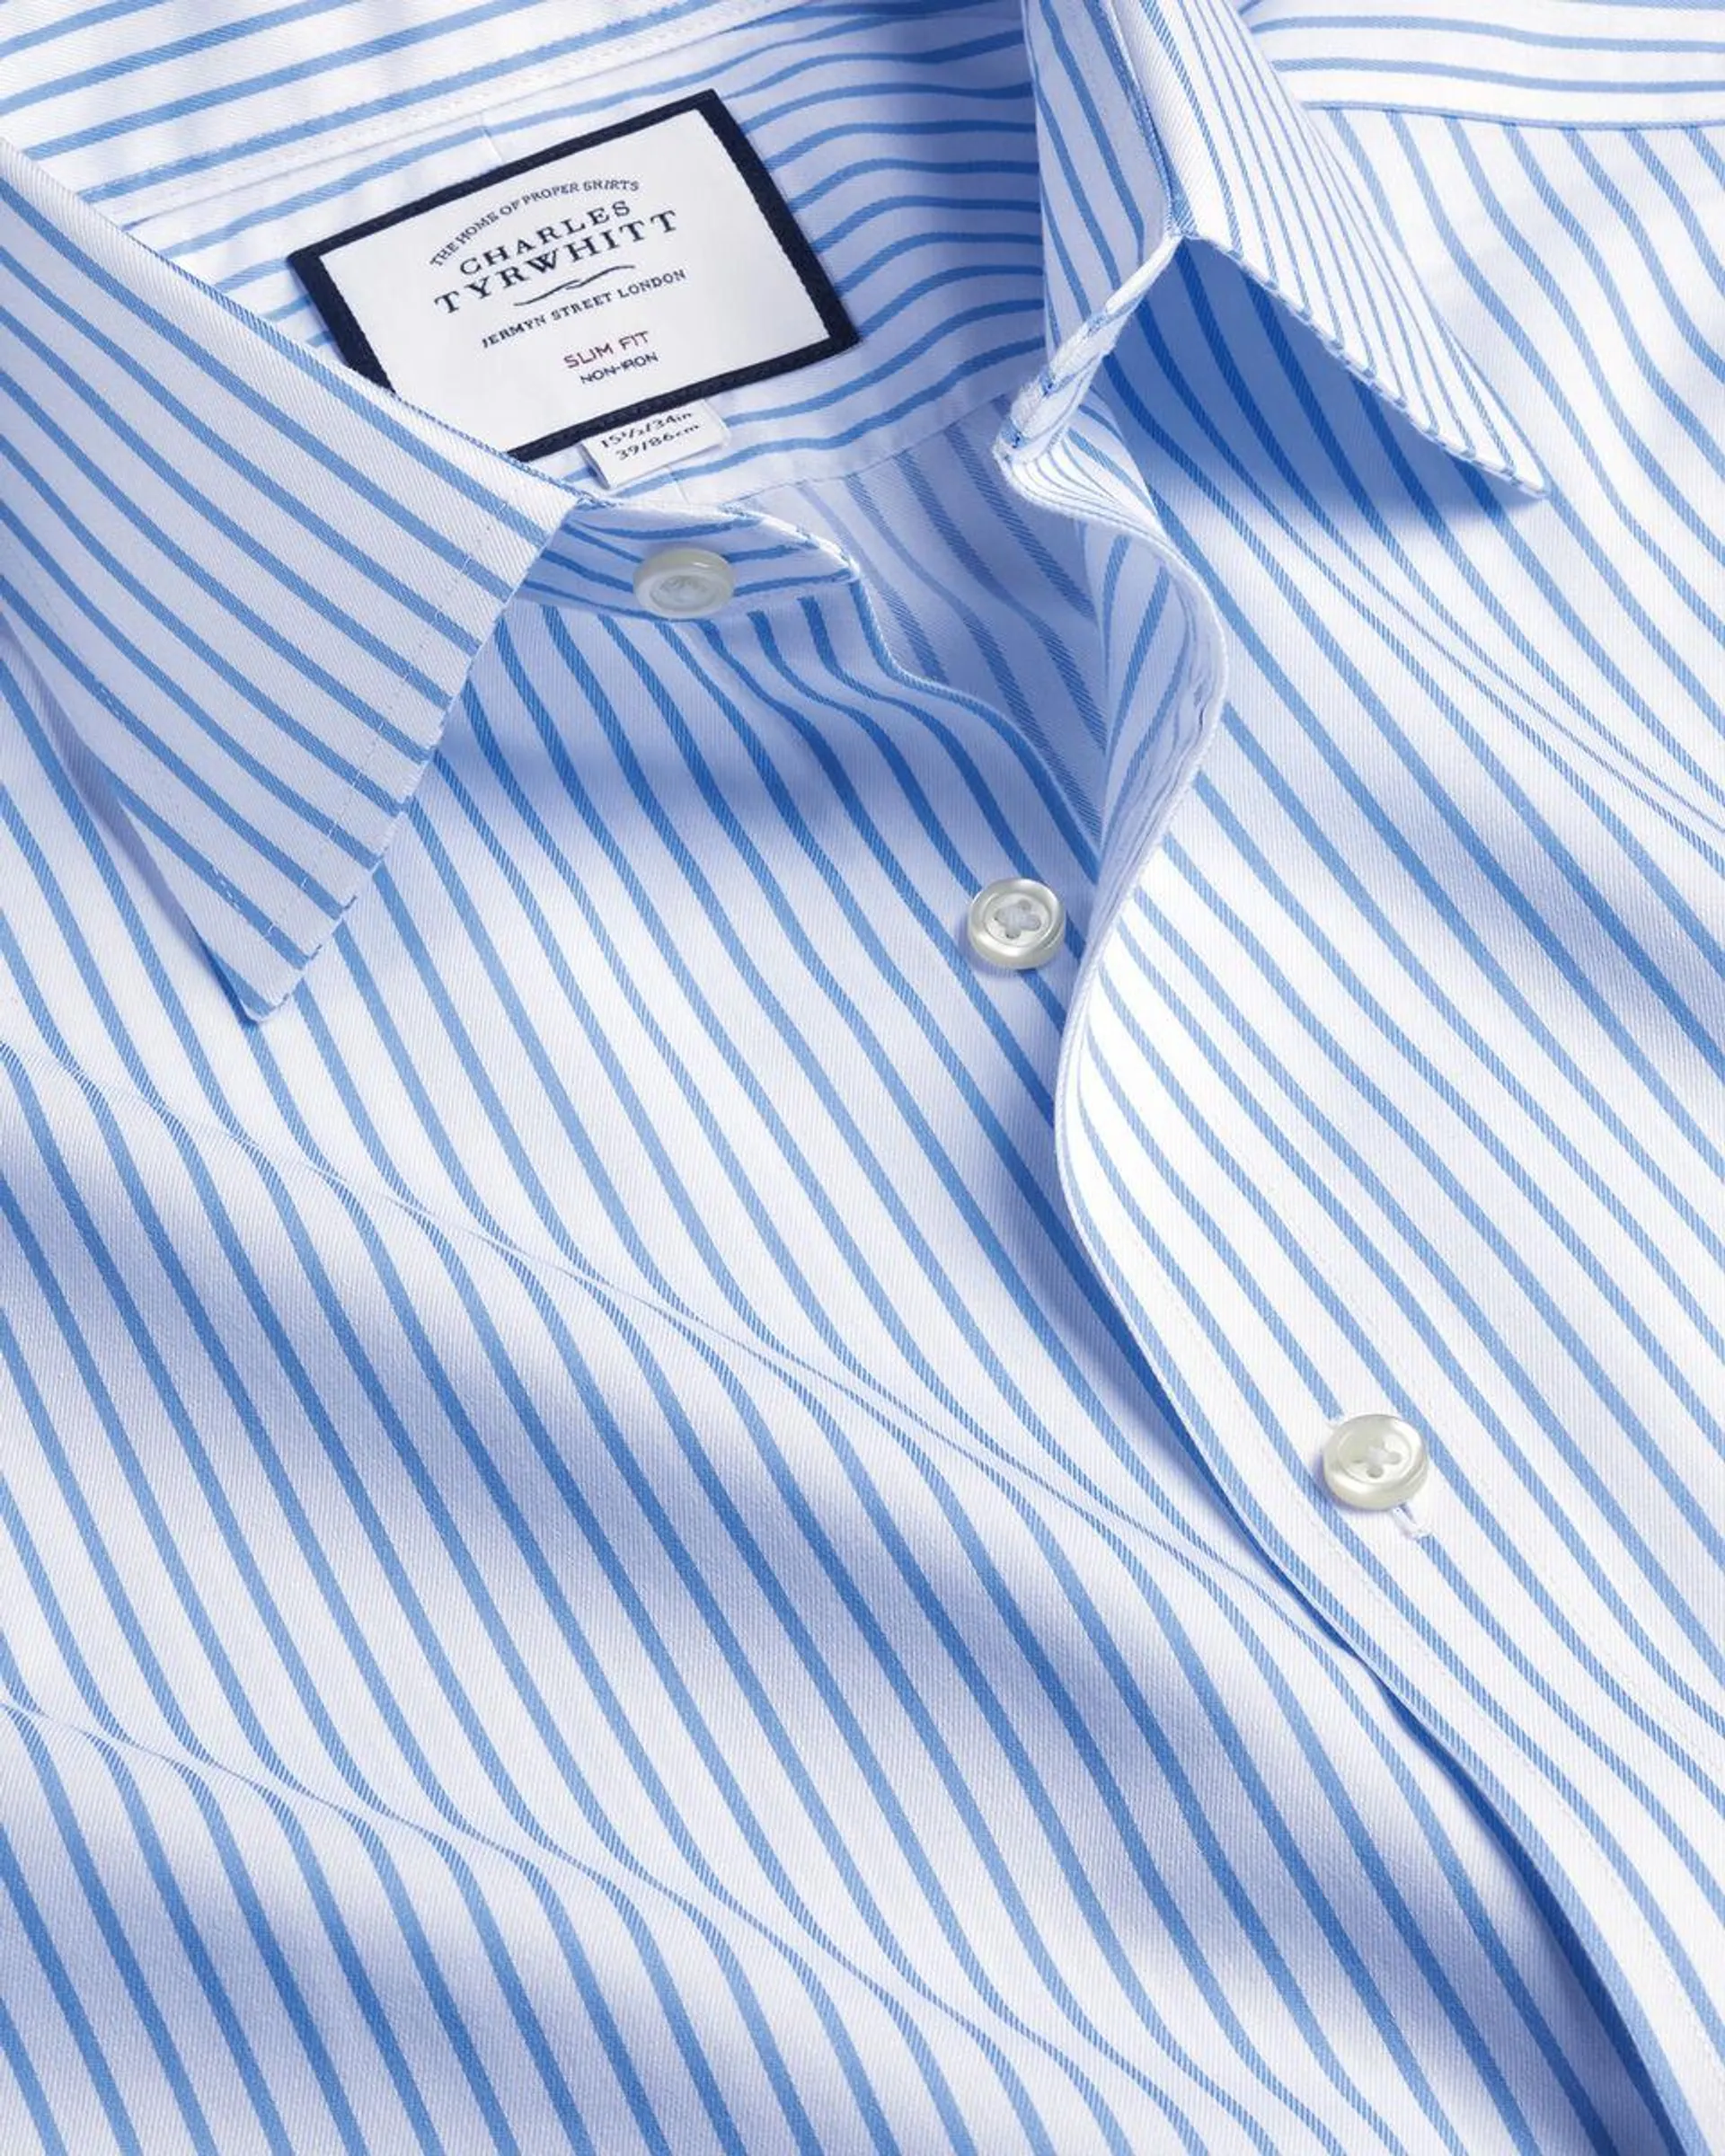 details about product: Non-Iron Twill Stripe Shirt - Cornflower Blue